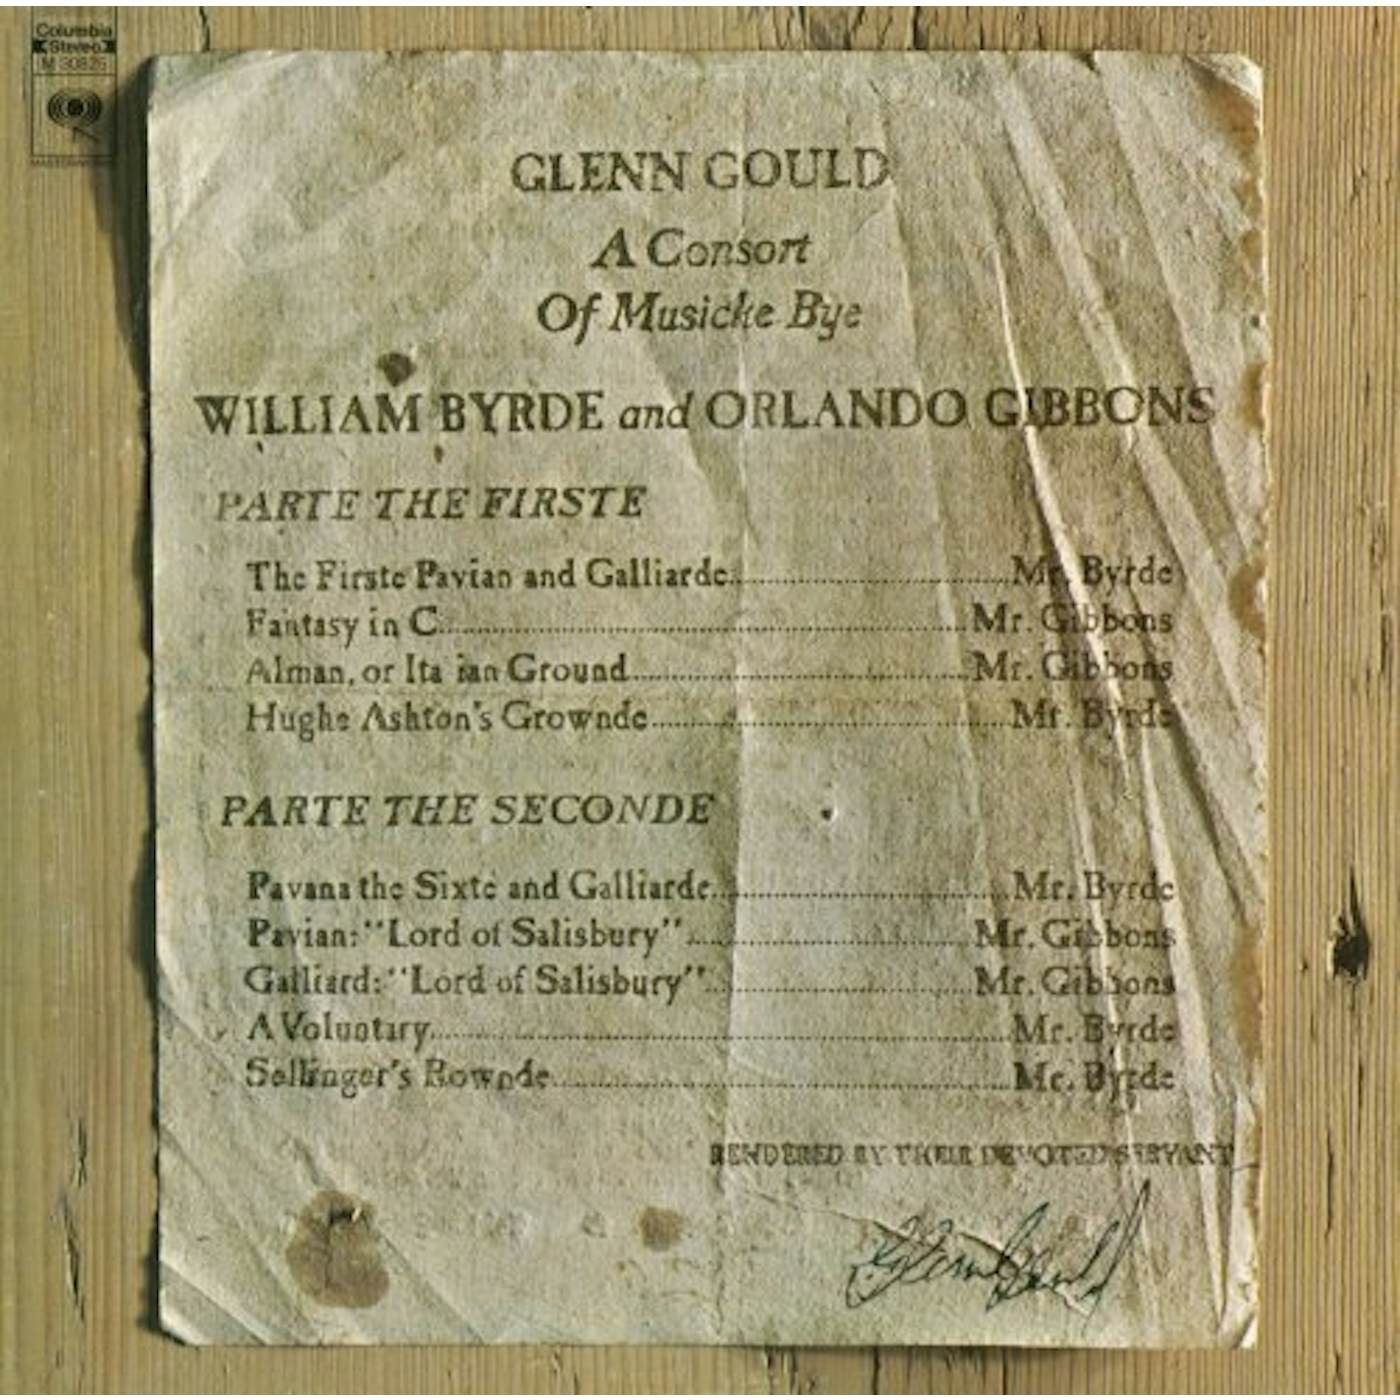 Glenn Gould CONSORT OF MUSIC BY BYRD & GIBBONS CD